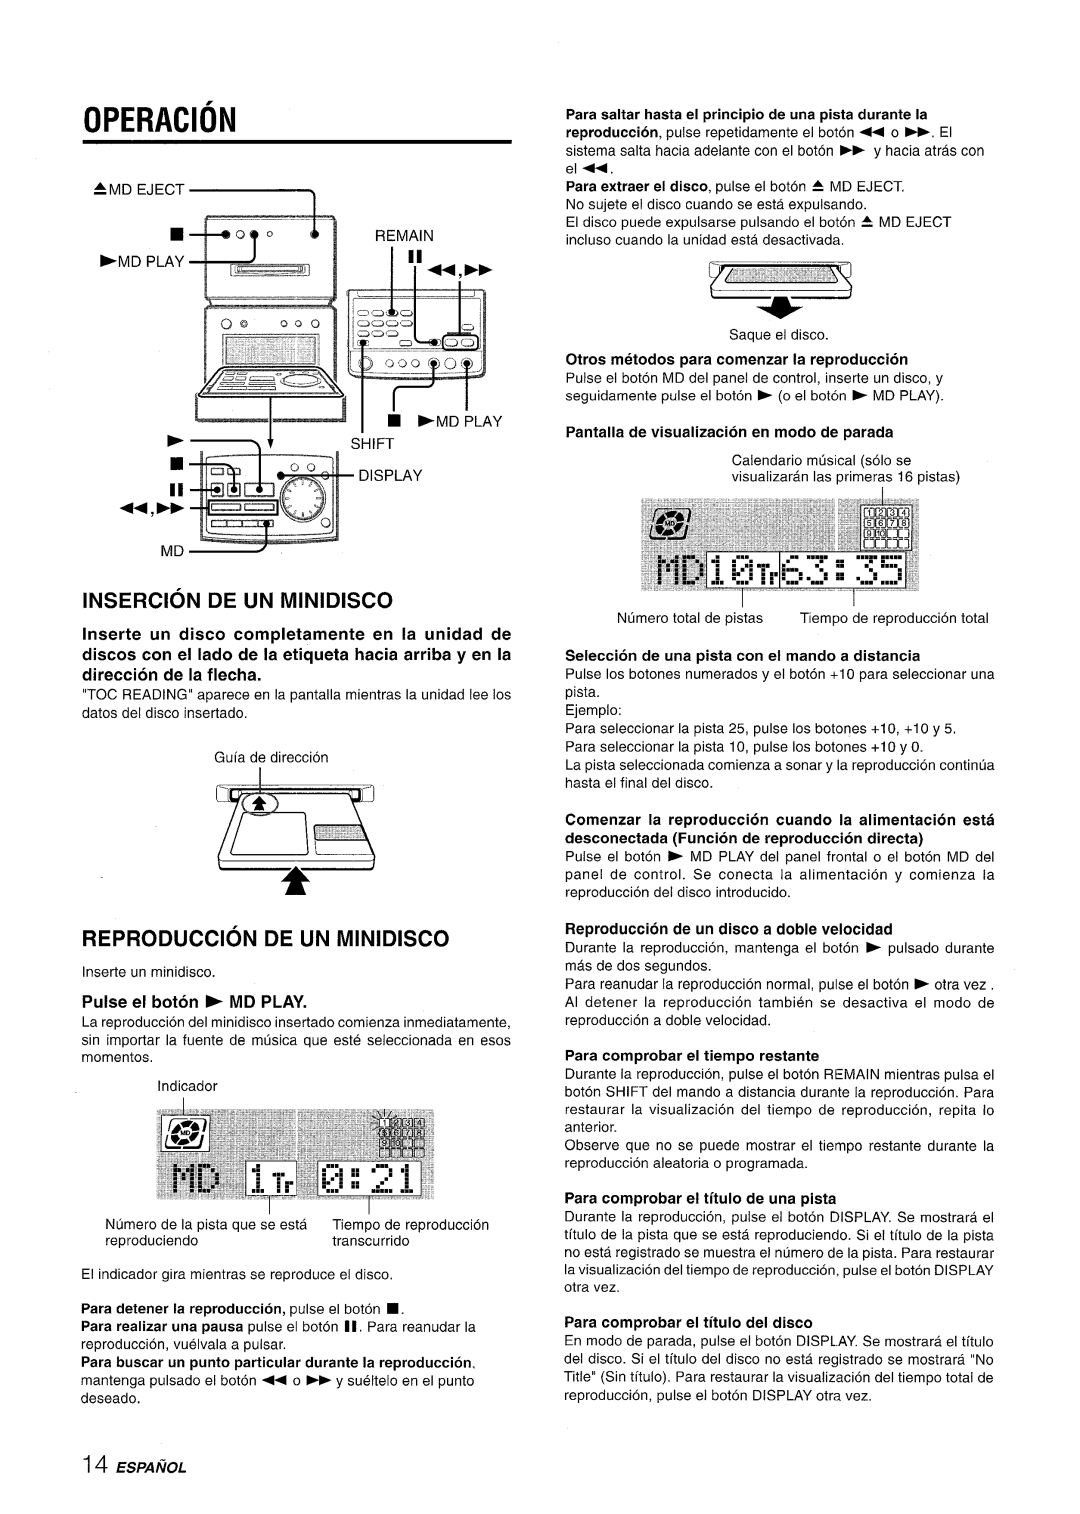 Aiwa XR-MD95 OPERACION ‘MD‘JEcT~, Insercion De Un Minidisco, Reproduction De Un Minidisco, F, Pulse el boton P MD PLAY 